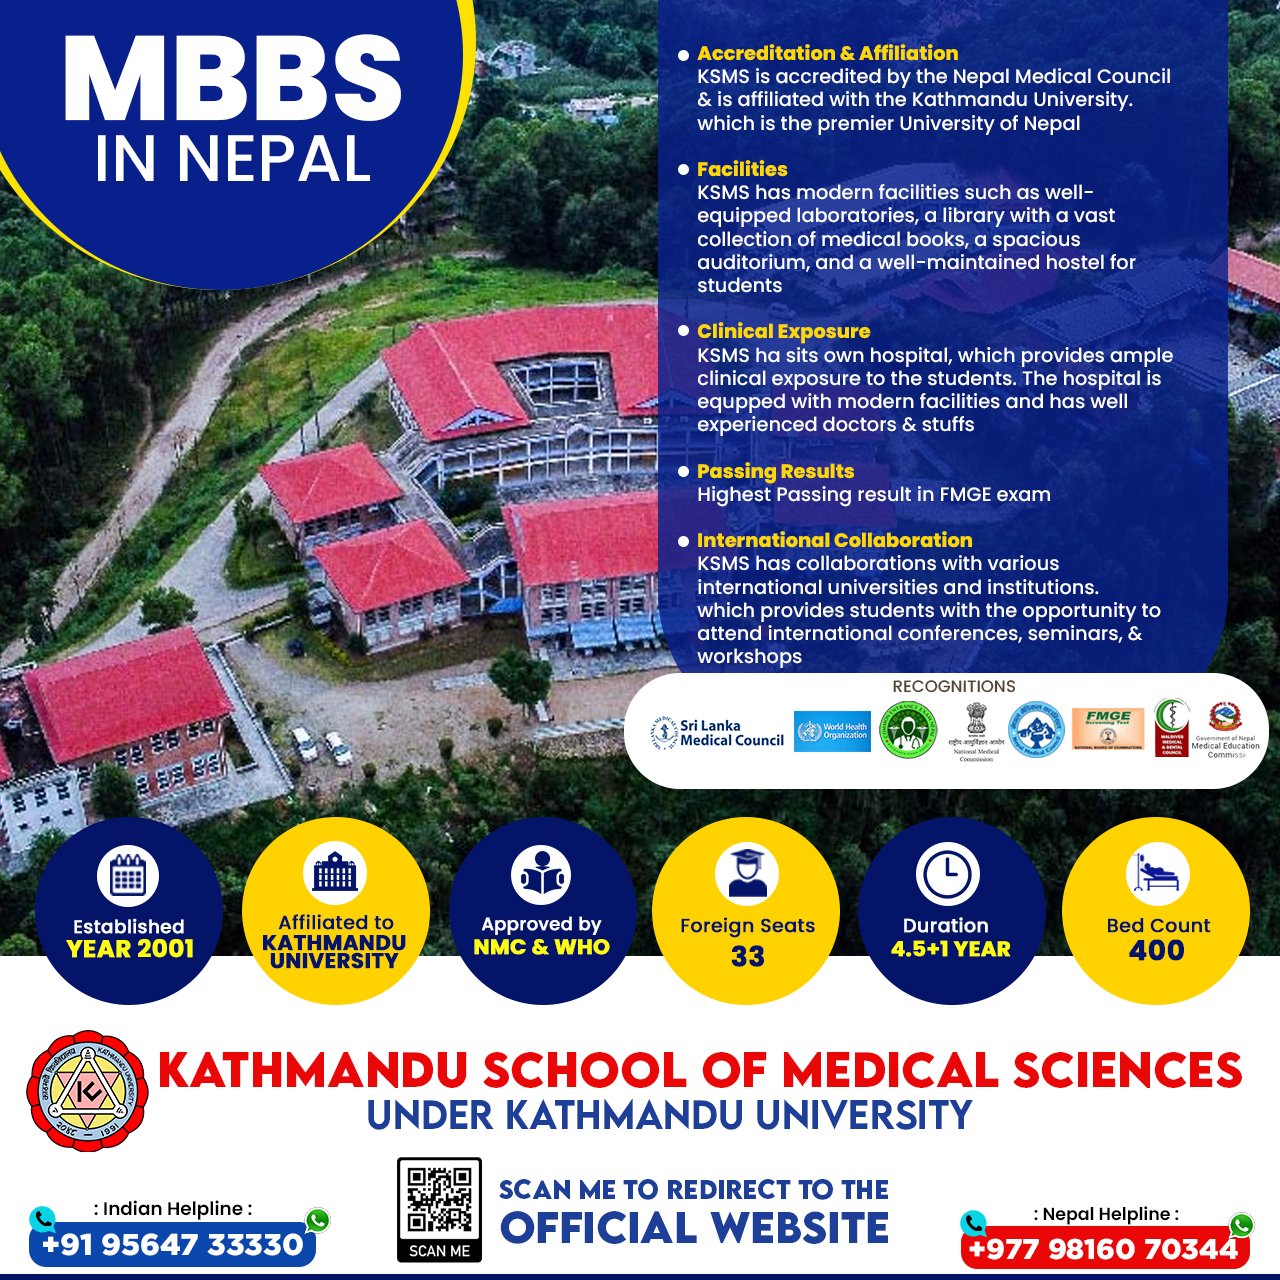 mbbs-in-nepal-at-kathmandu-university-school-of-medical-sciences-under-kathmandu-university